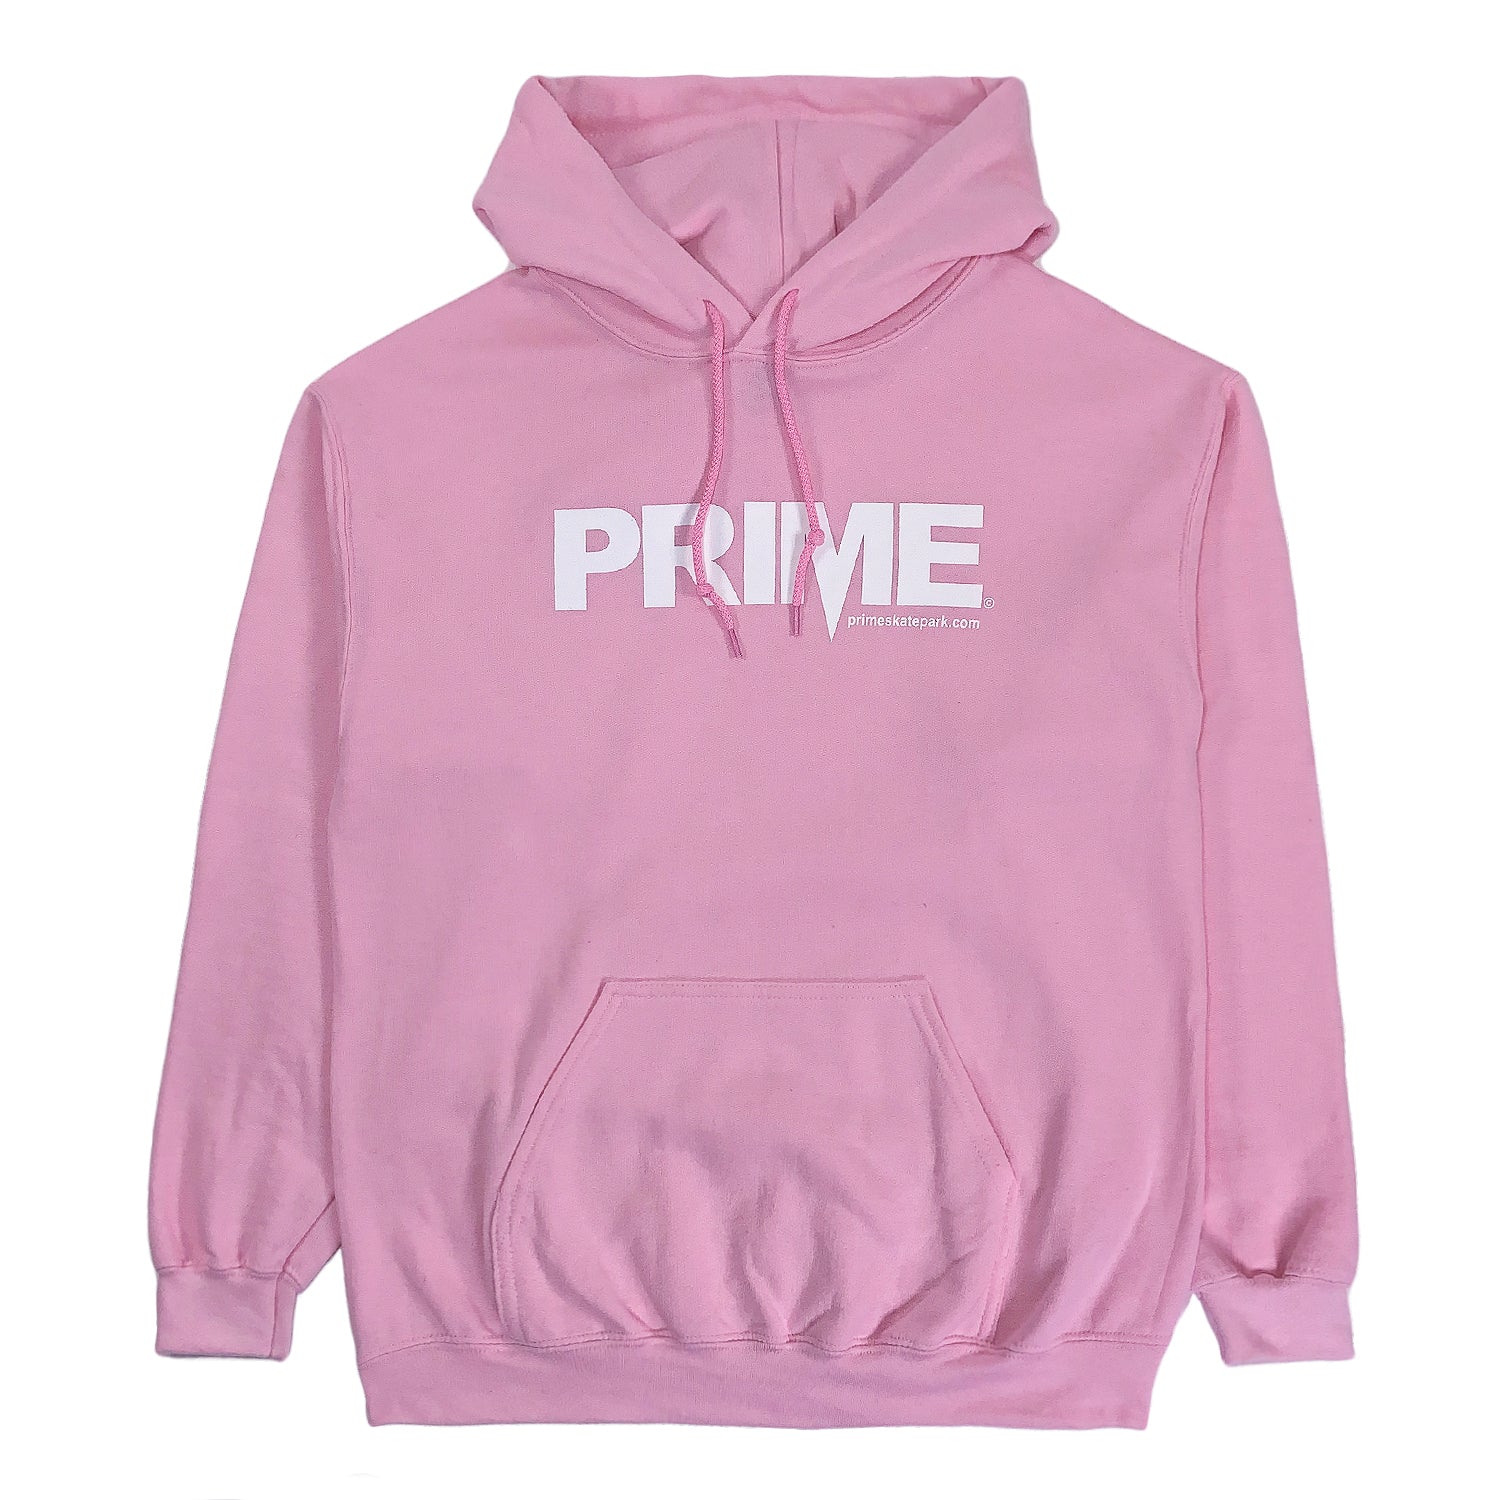 Prime Delux OG Logo Hooded Sweat - Light Pink / White - Prime Delux Store